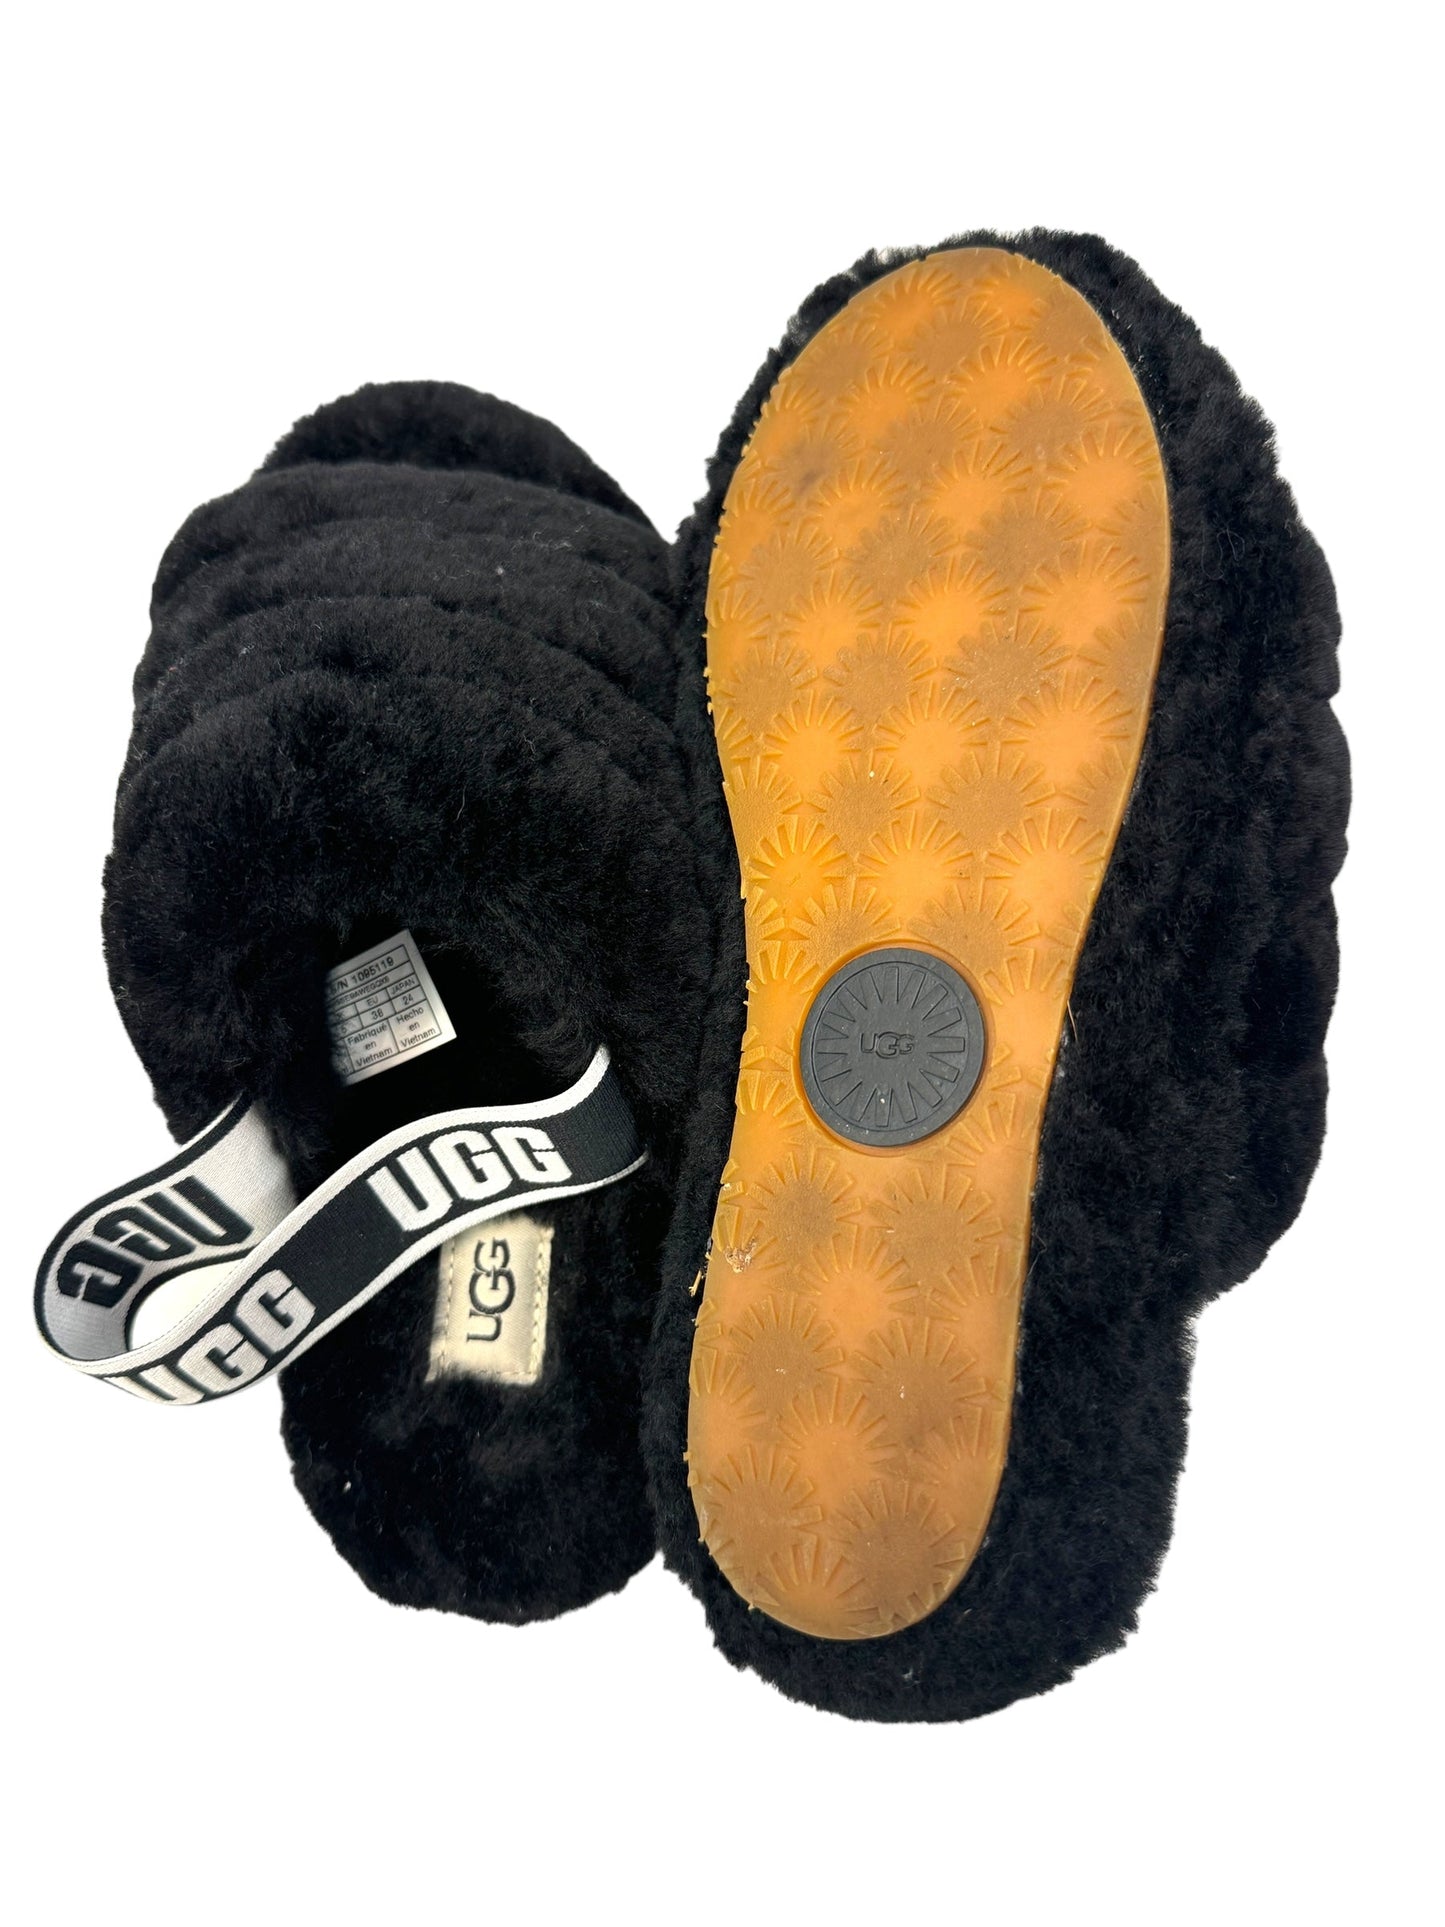 Black Slippers Ugg, Size 7